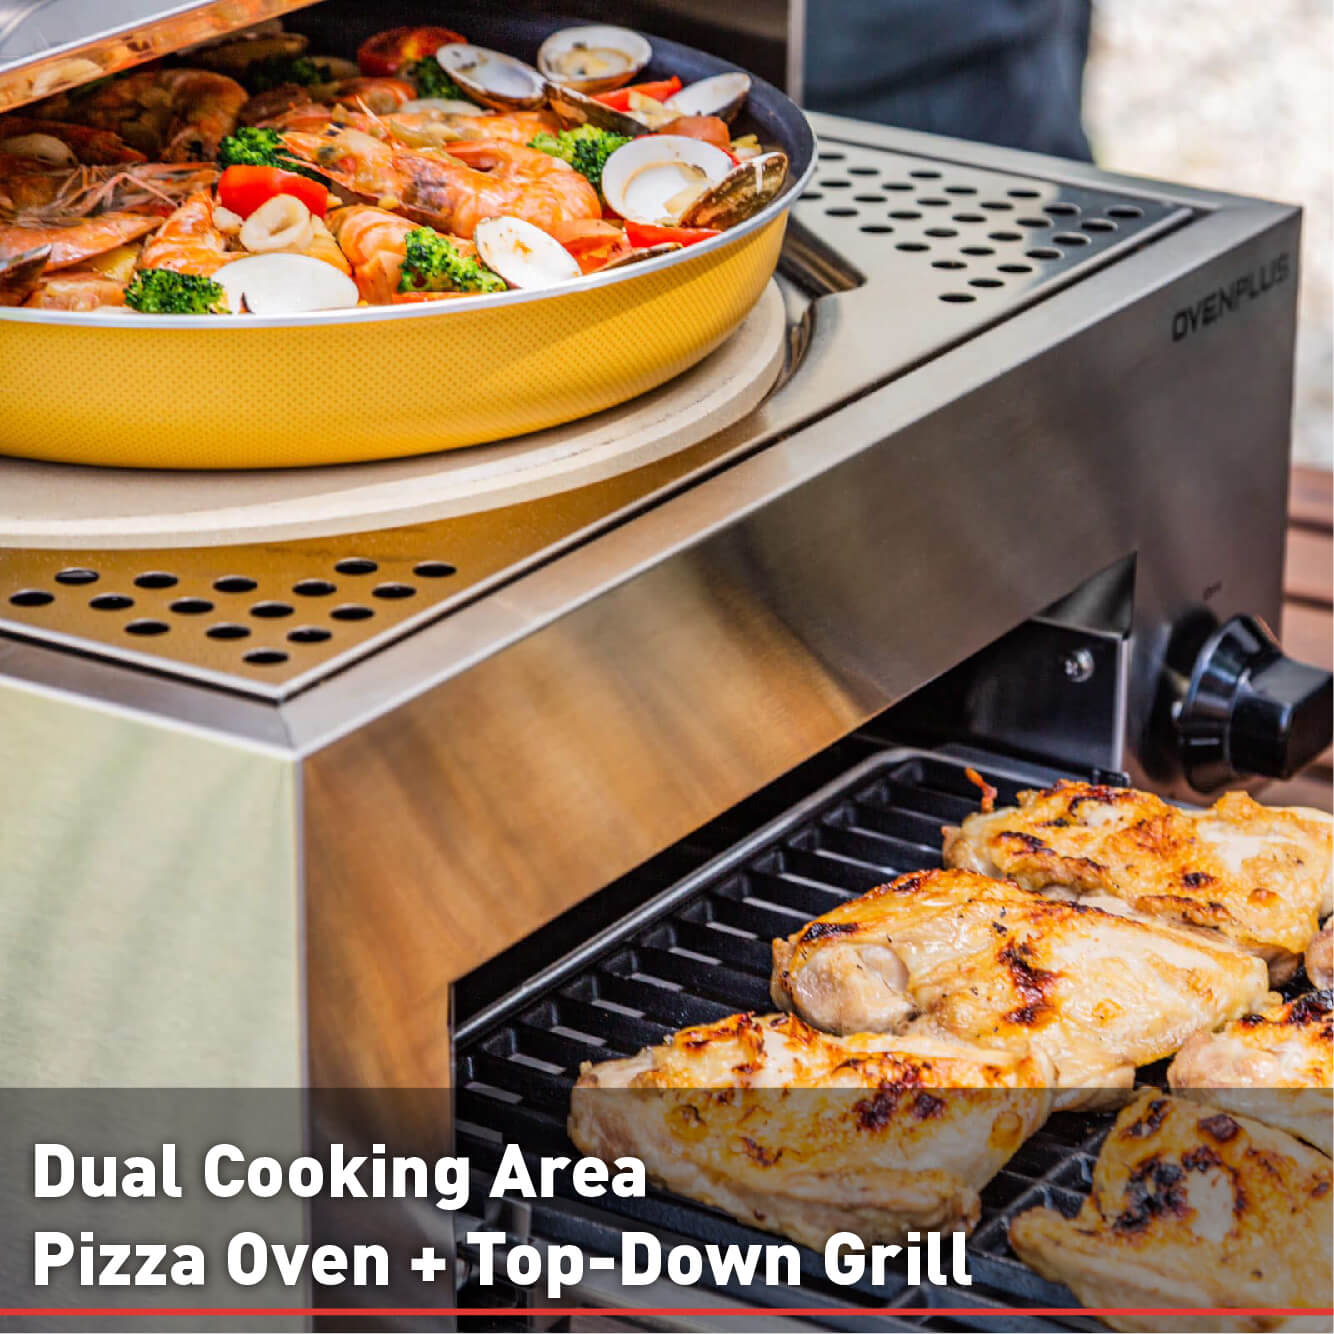 Capt'n Cook OvenPlus Double Deck Outdoor Pizza Oven